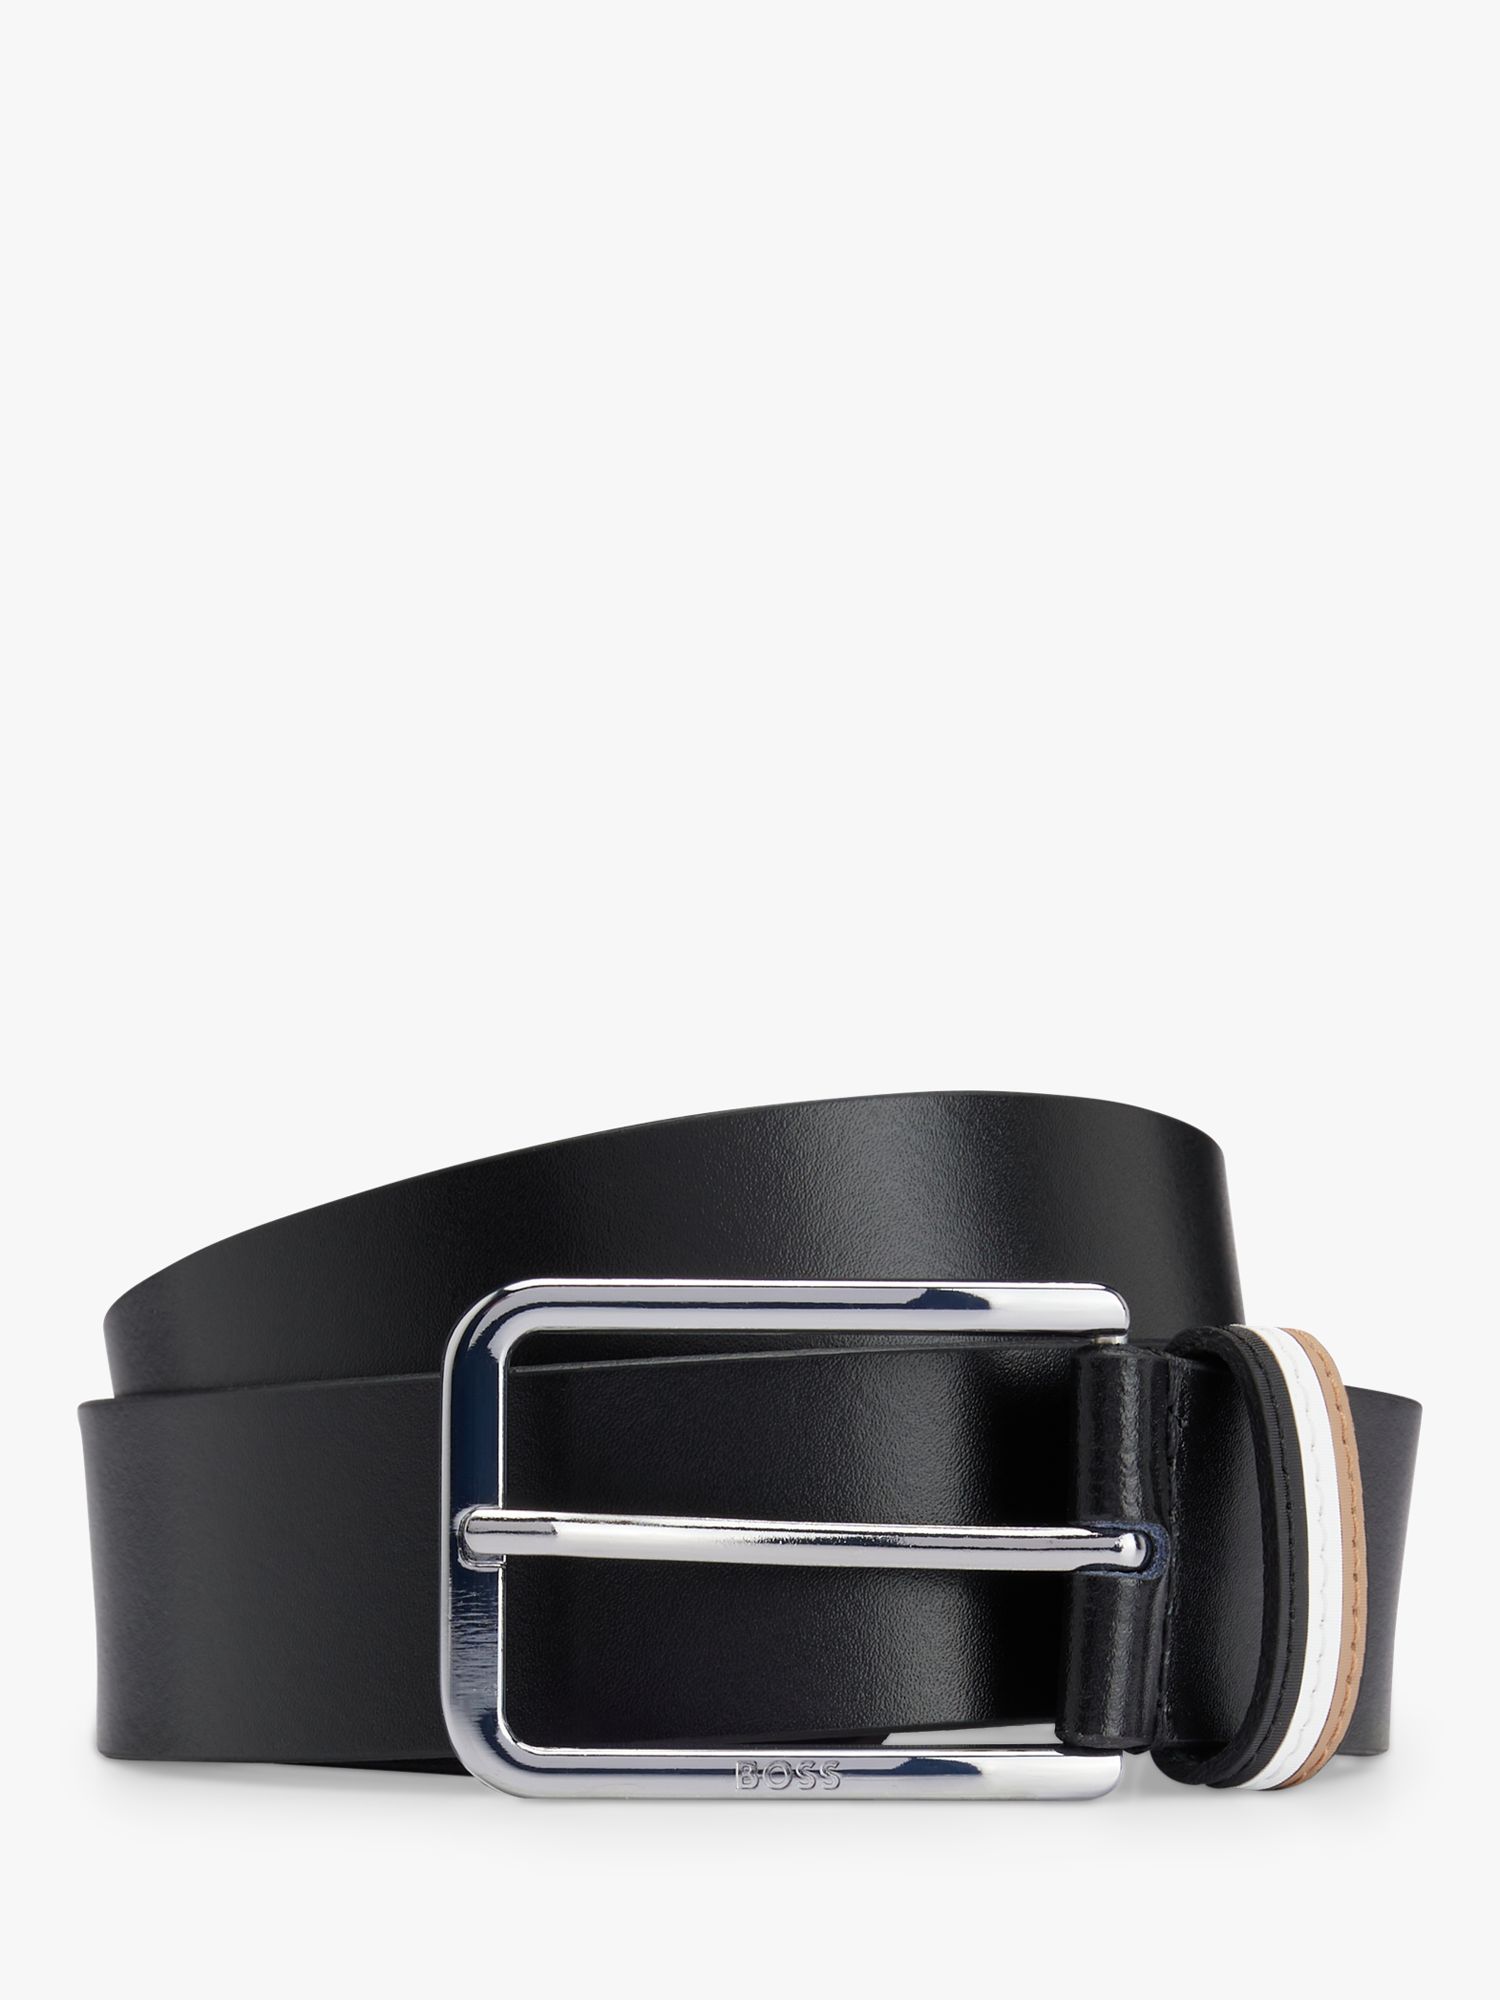 BOSS Calis Leather Belt, Black at John Lewis & Partners